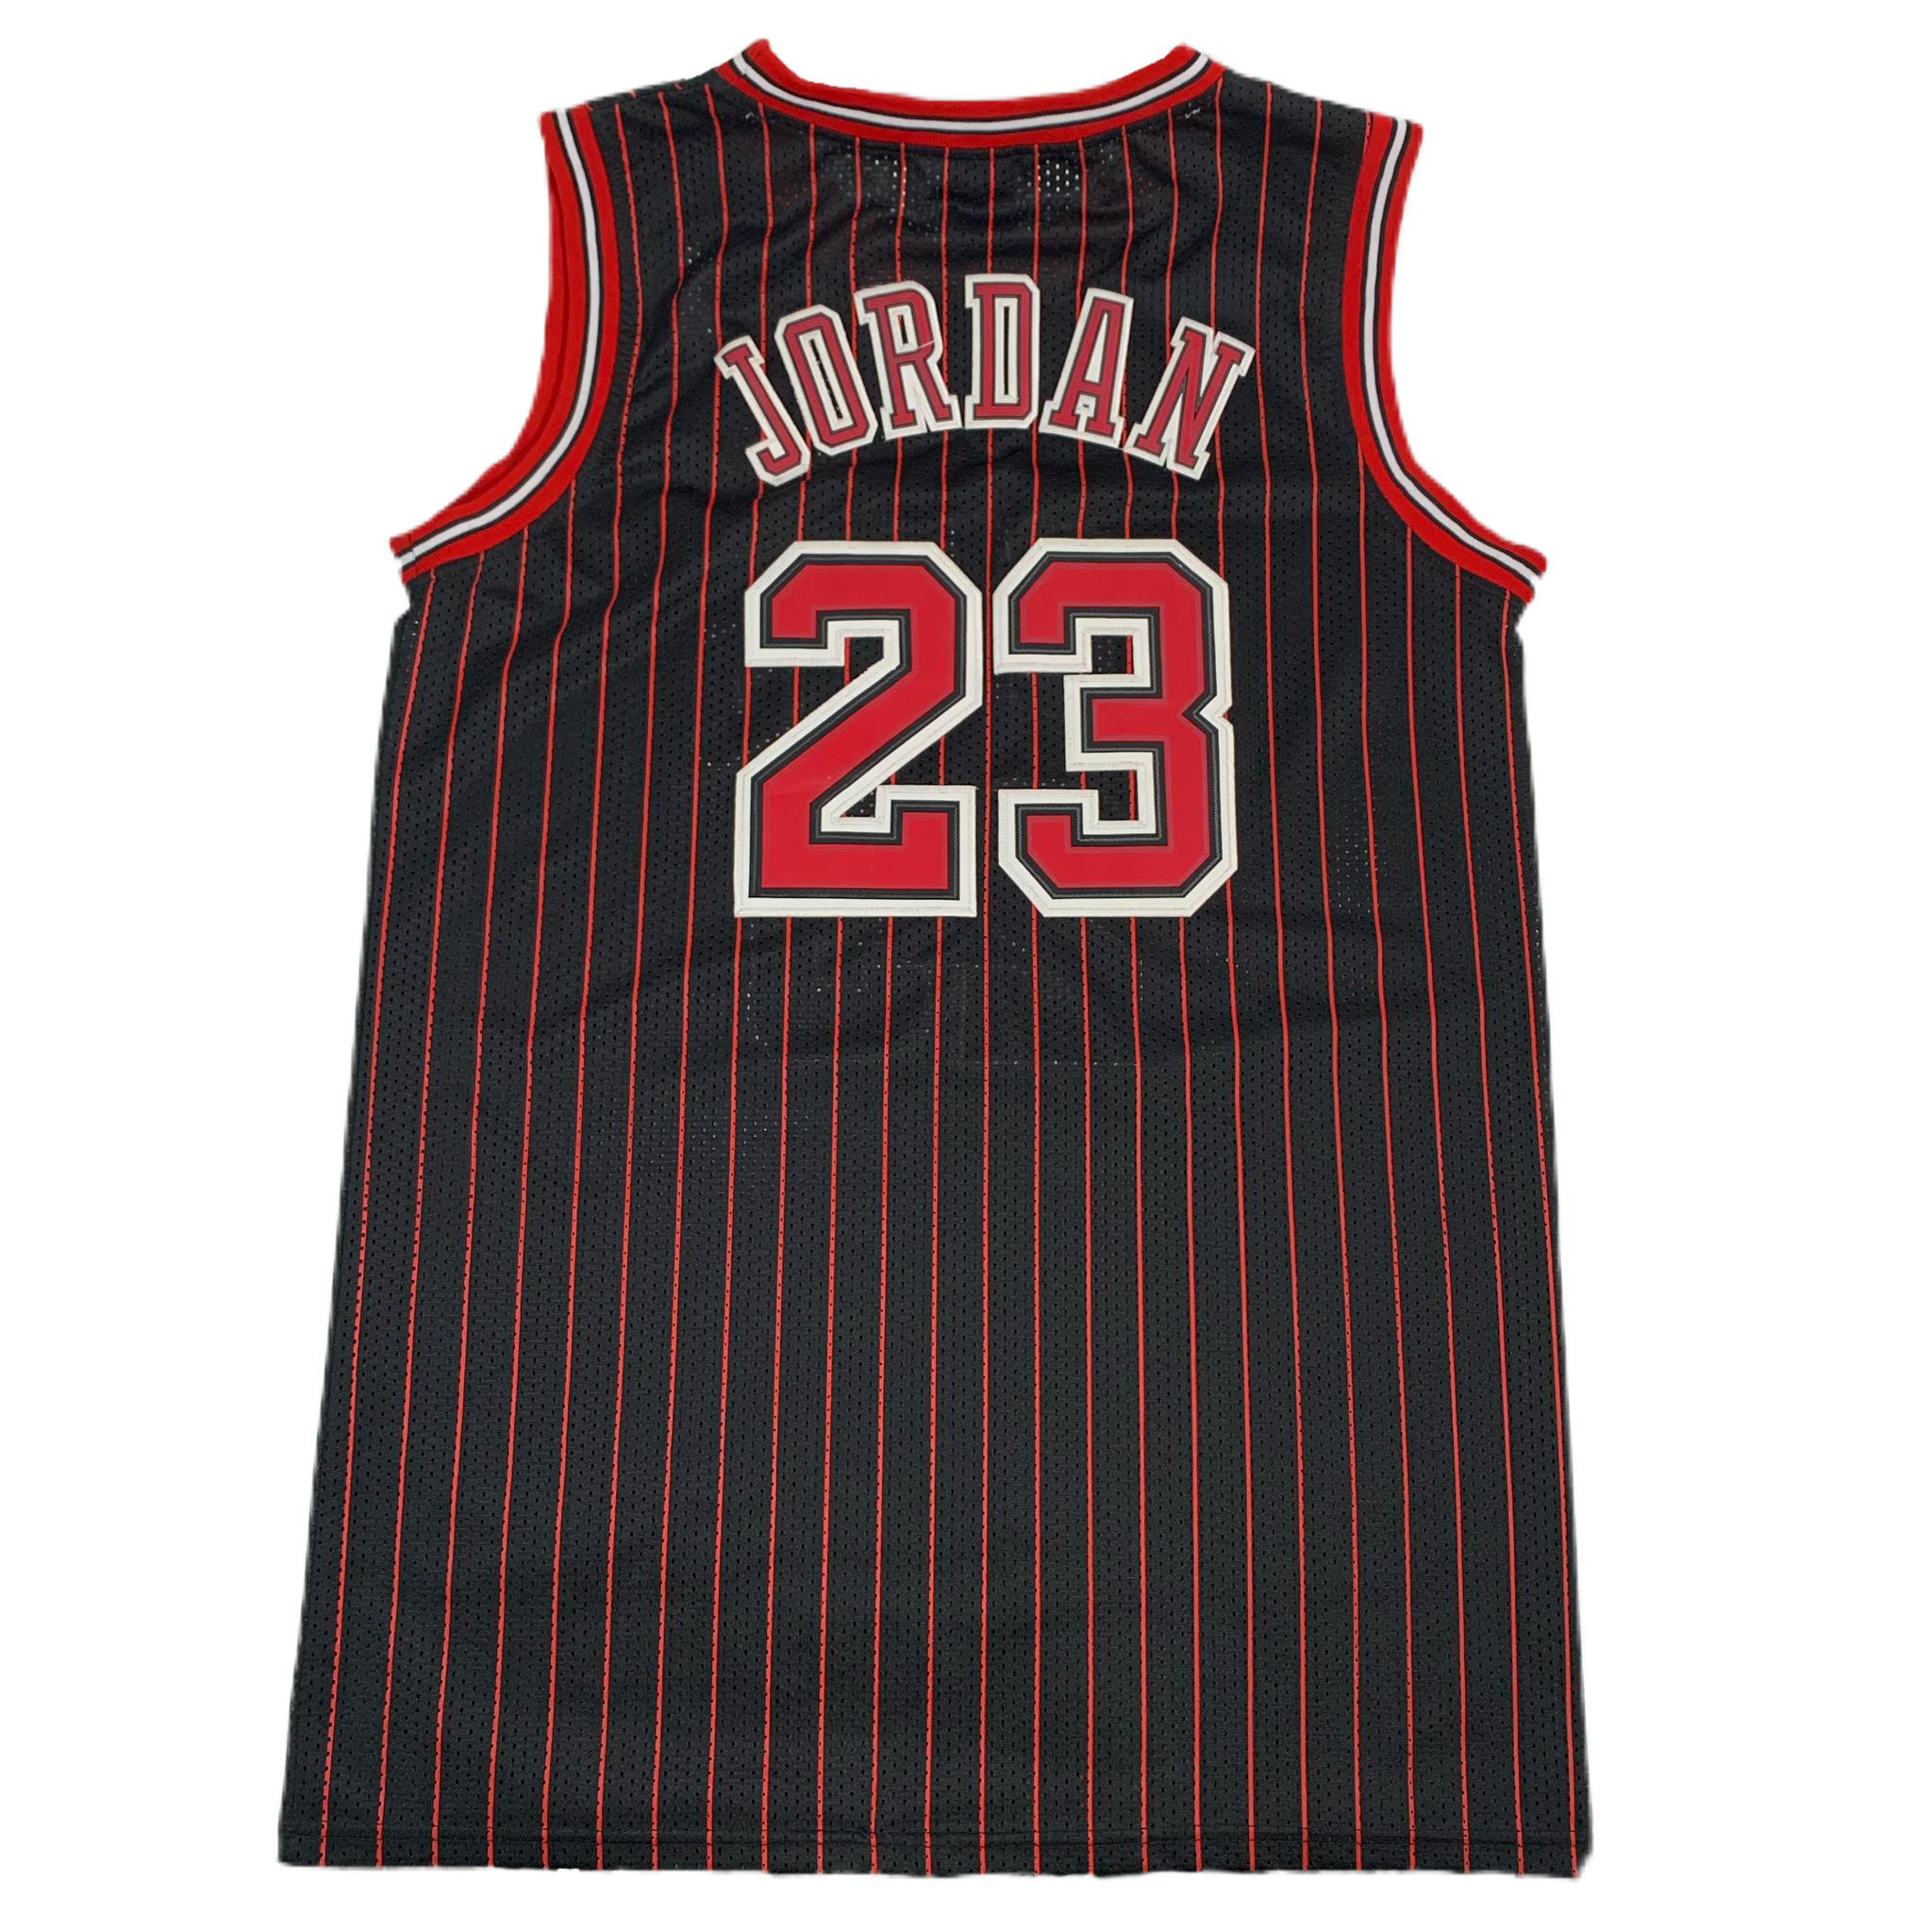 Michael Jordan Chicago Bulls Jersey Black 1984 Rookie season – Classic  Authentics